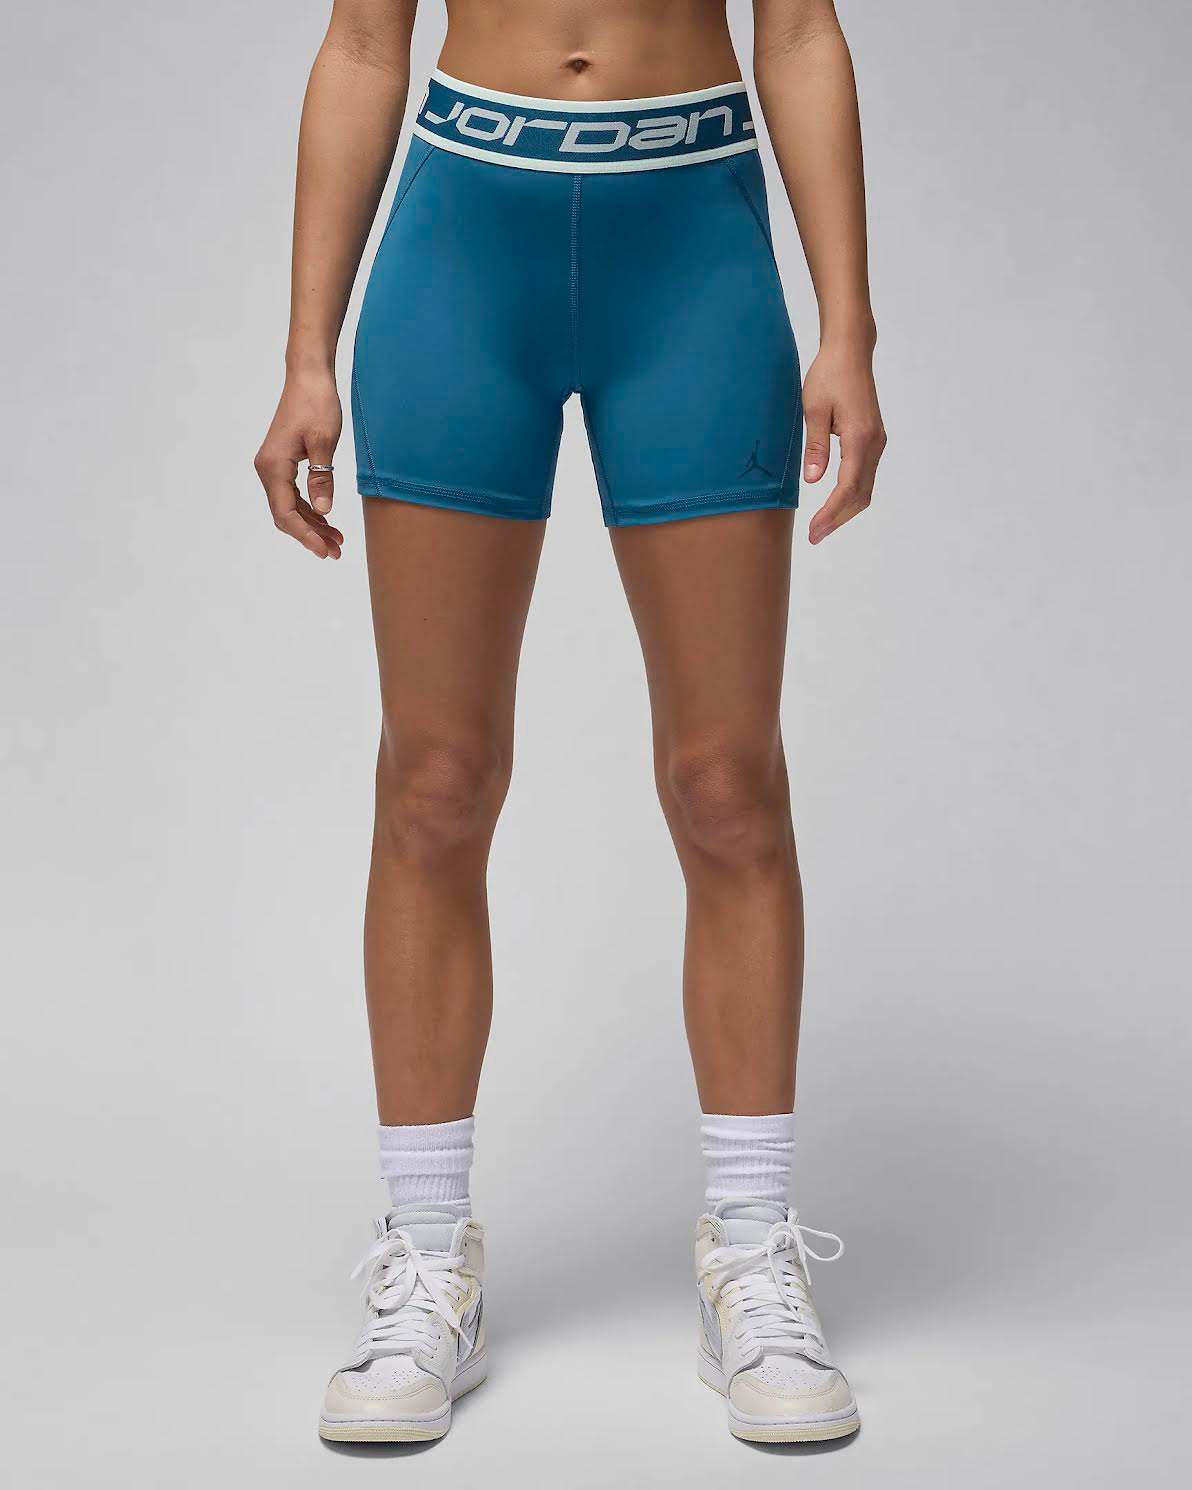 Jordan-Womens-Sport-Shorts-Industrial-Blue